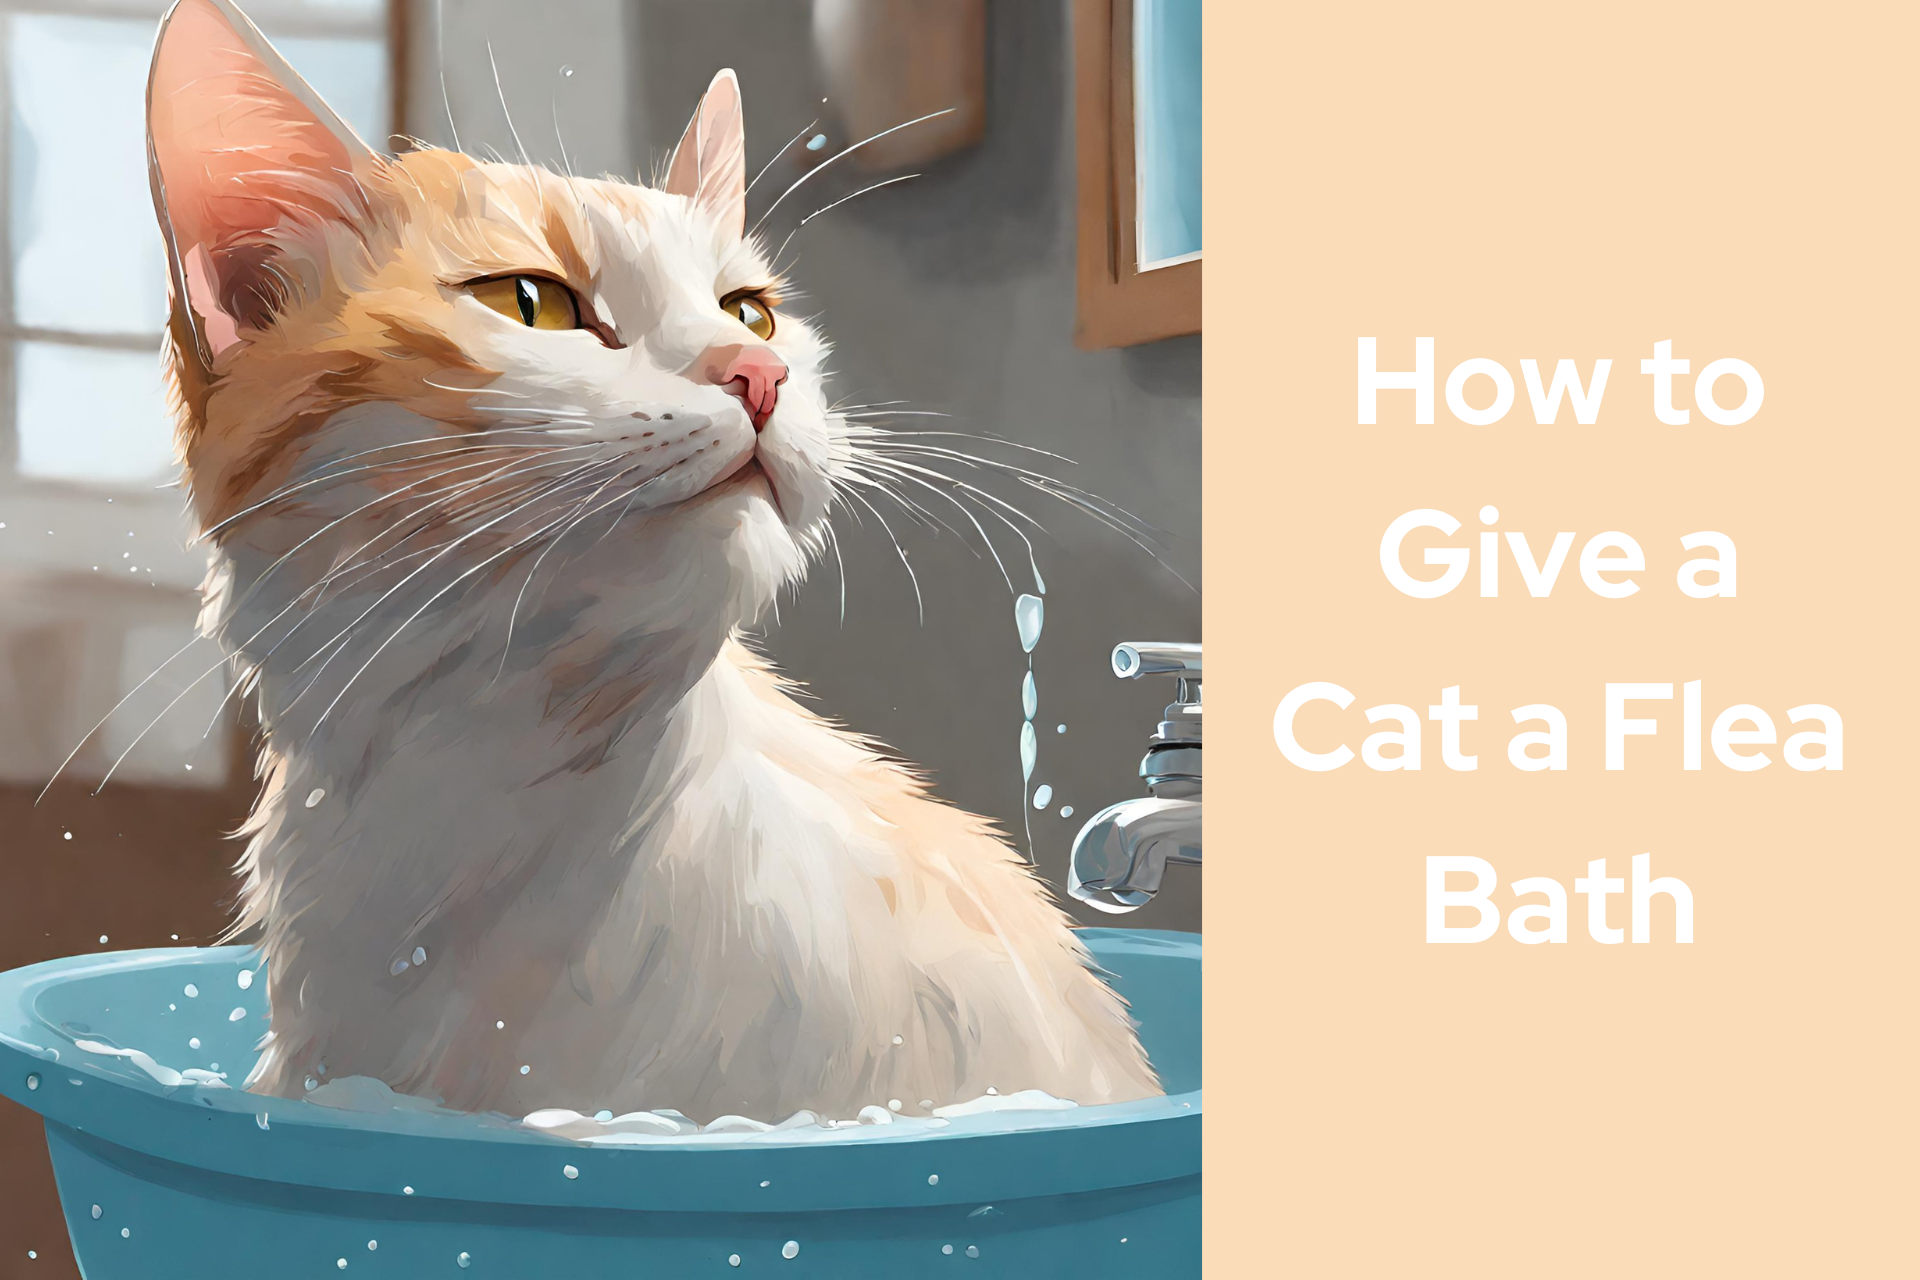 How to Give a Cat a Flea Bath